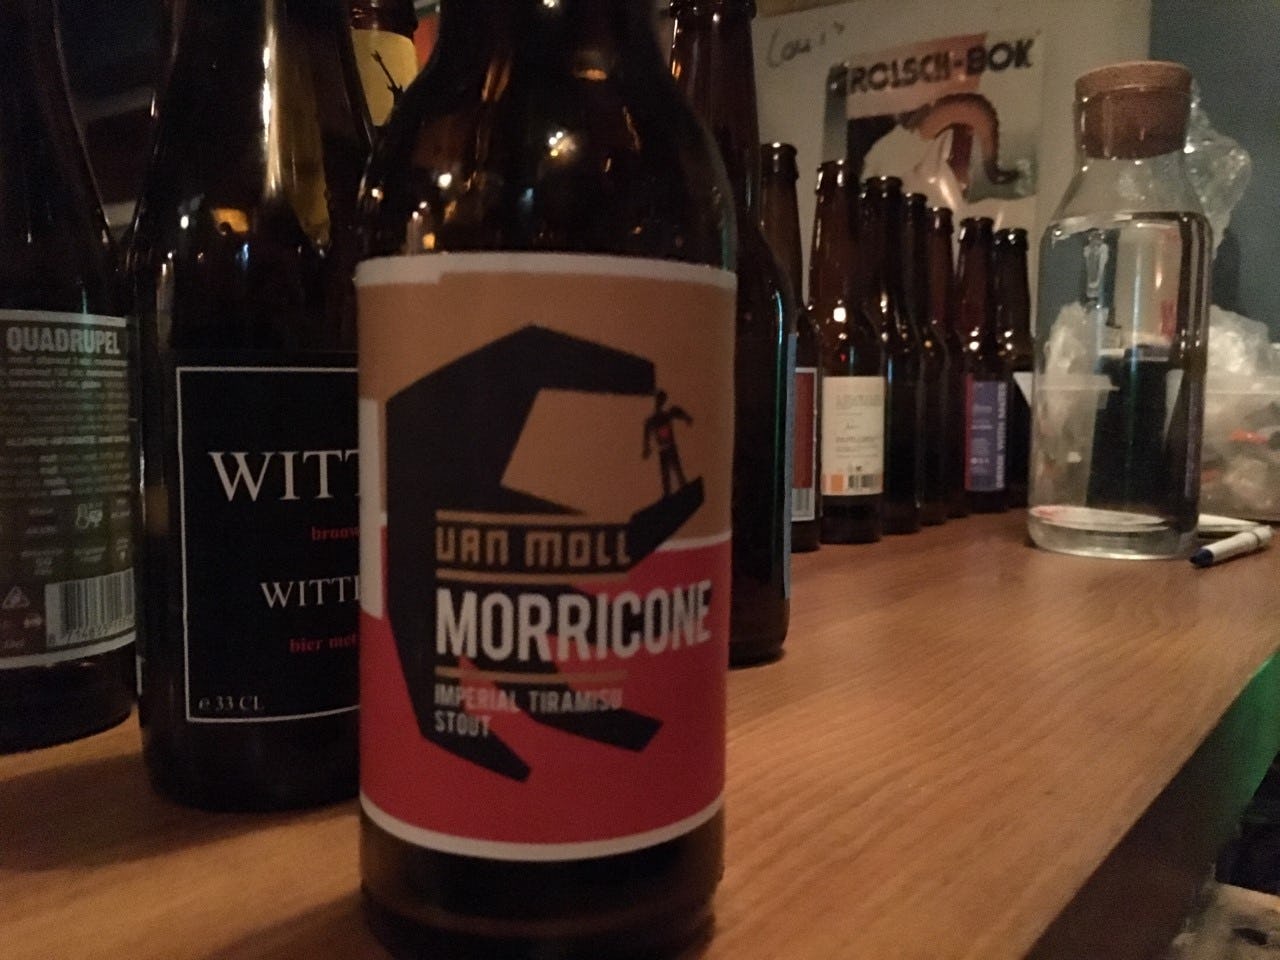 Brabantse Bierkaart: Morricone van Van Moll is beste bier van Brabant